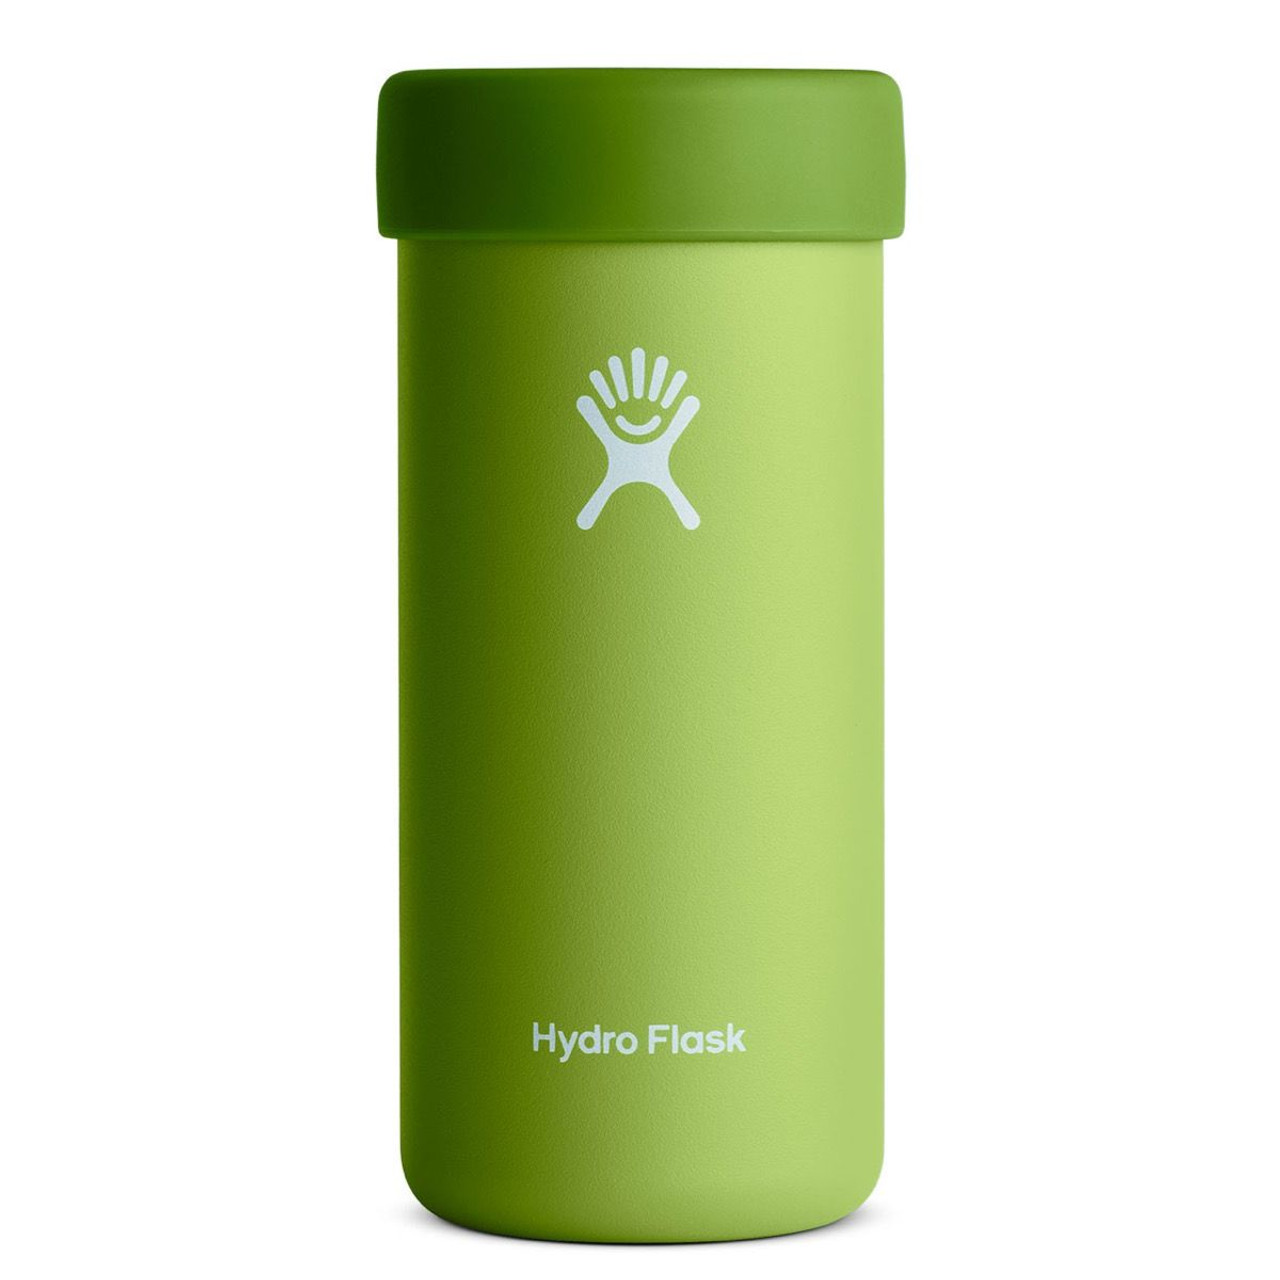 Hydro Flask 12 oz Cooler Cup - Laguna